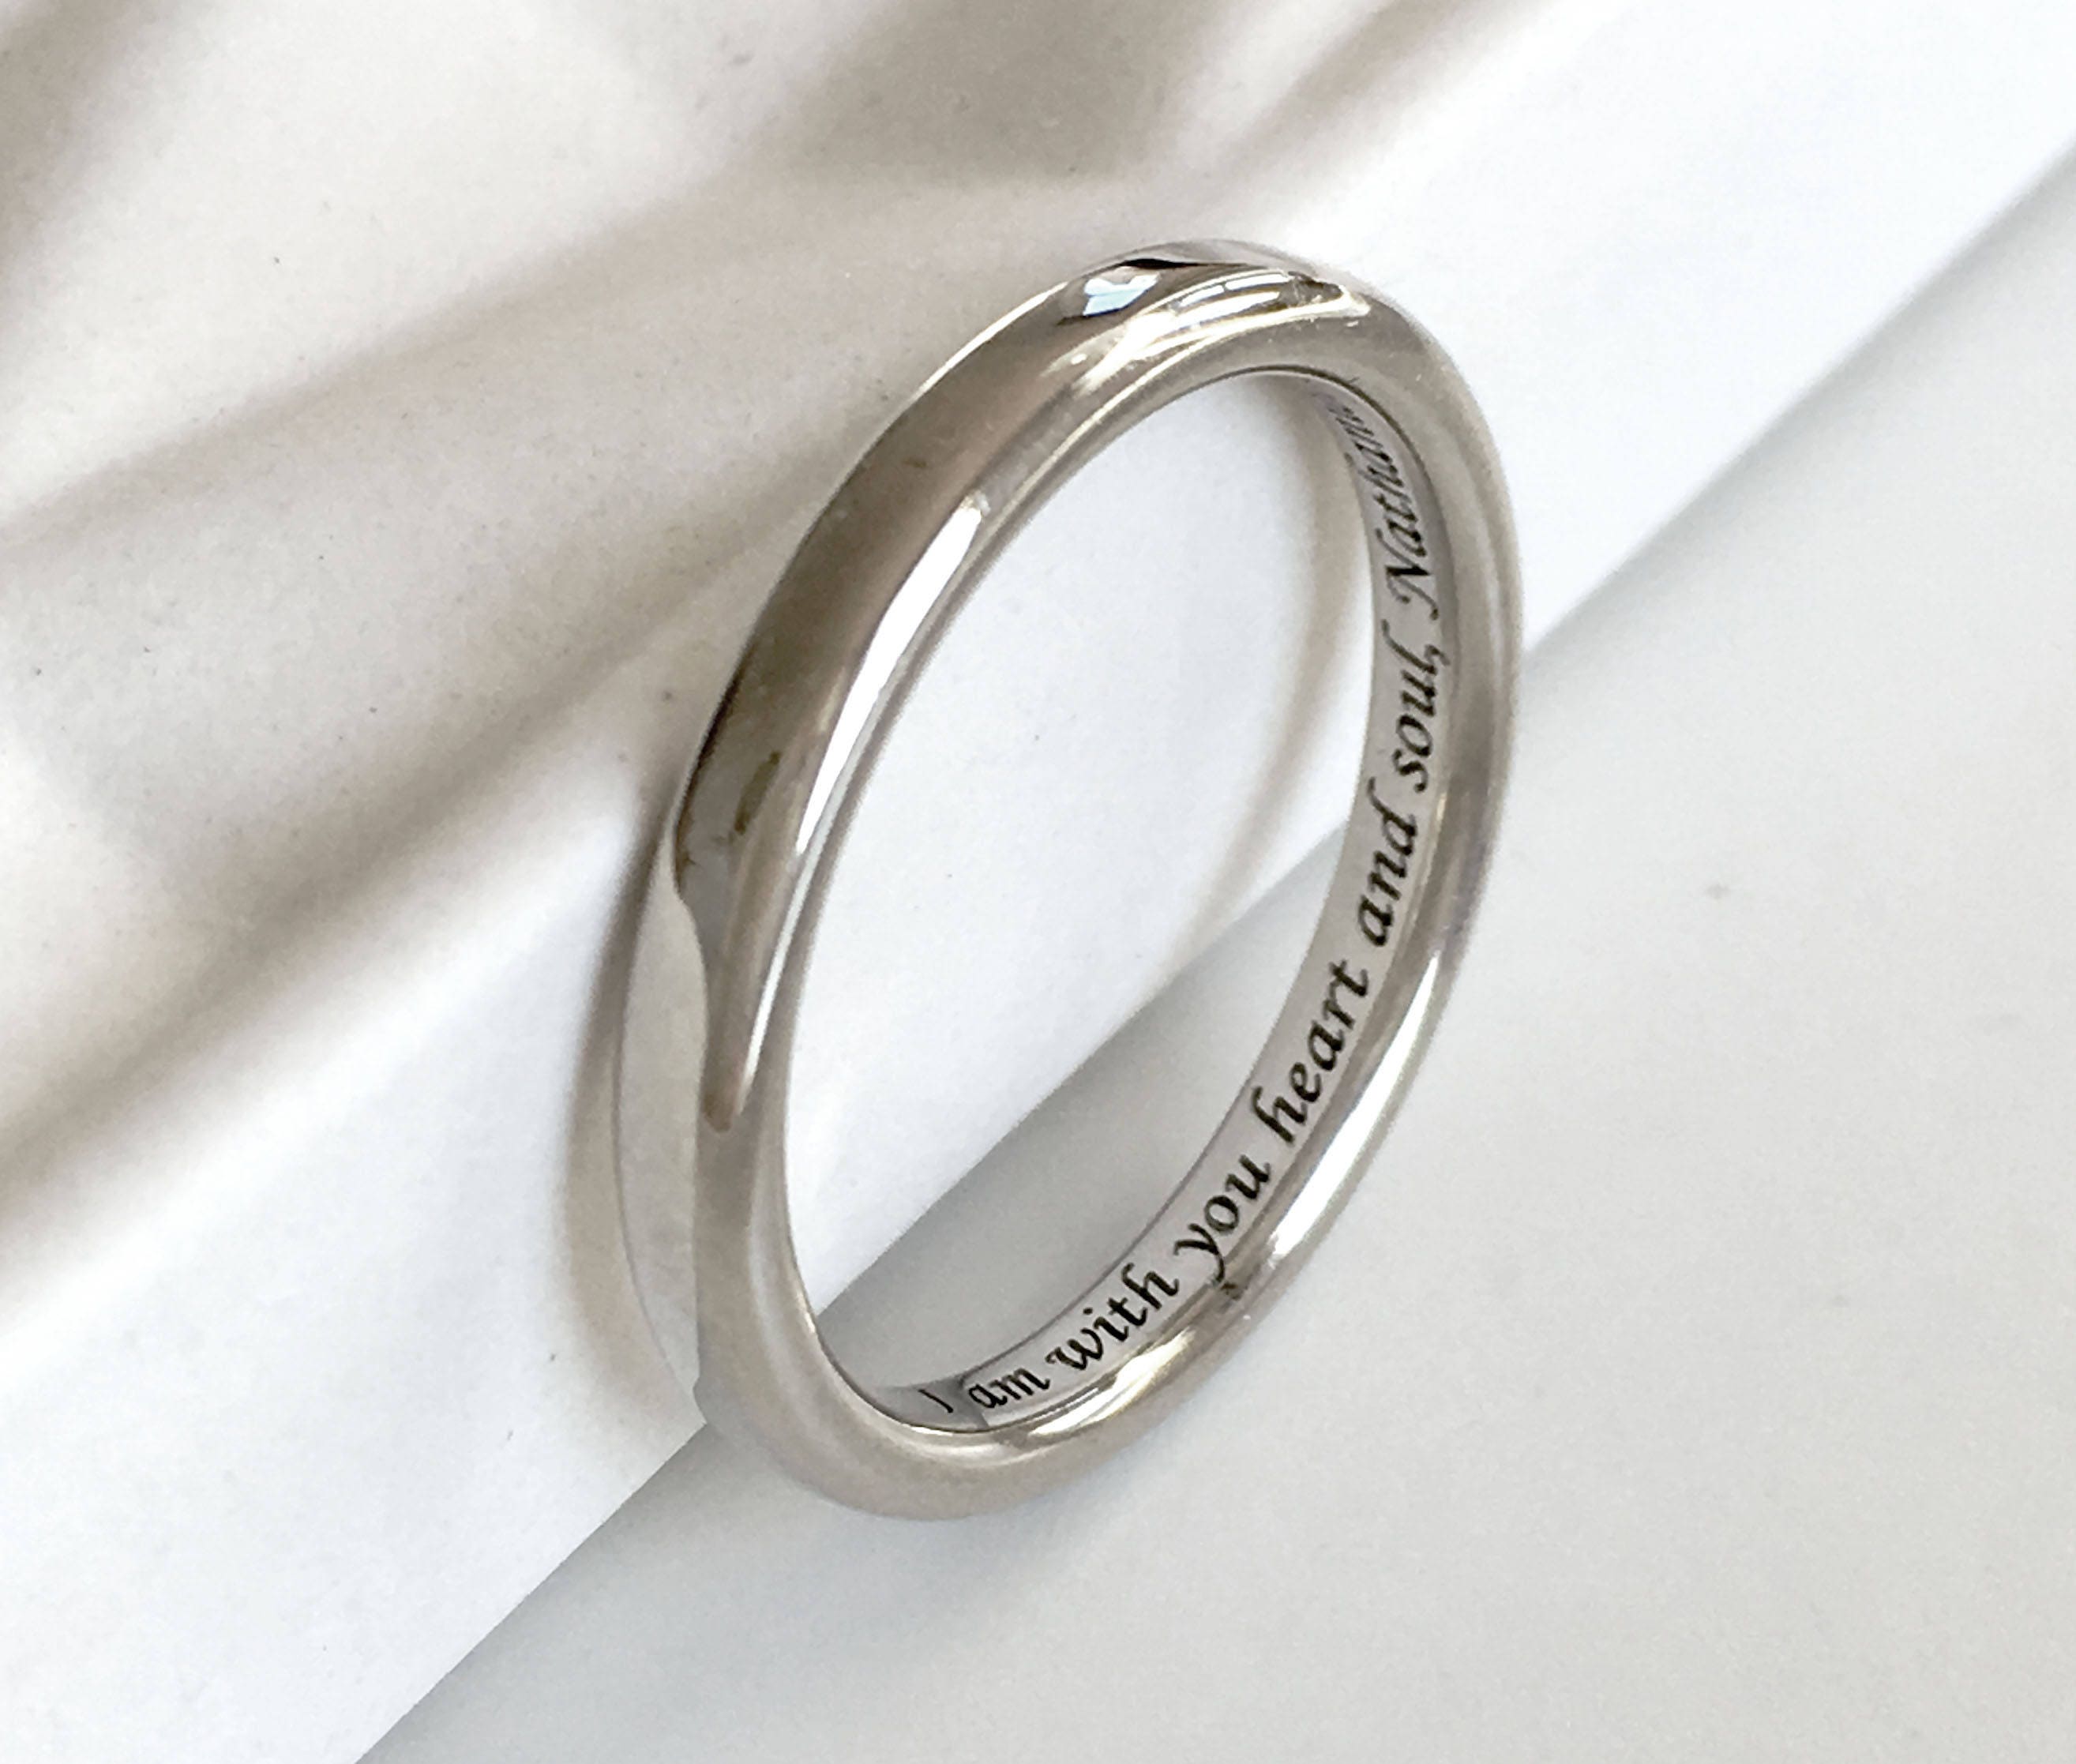 7mm Titanium Ring 'Forever Yours' Engraved Wedding Band | eBay